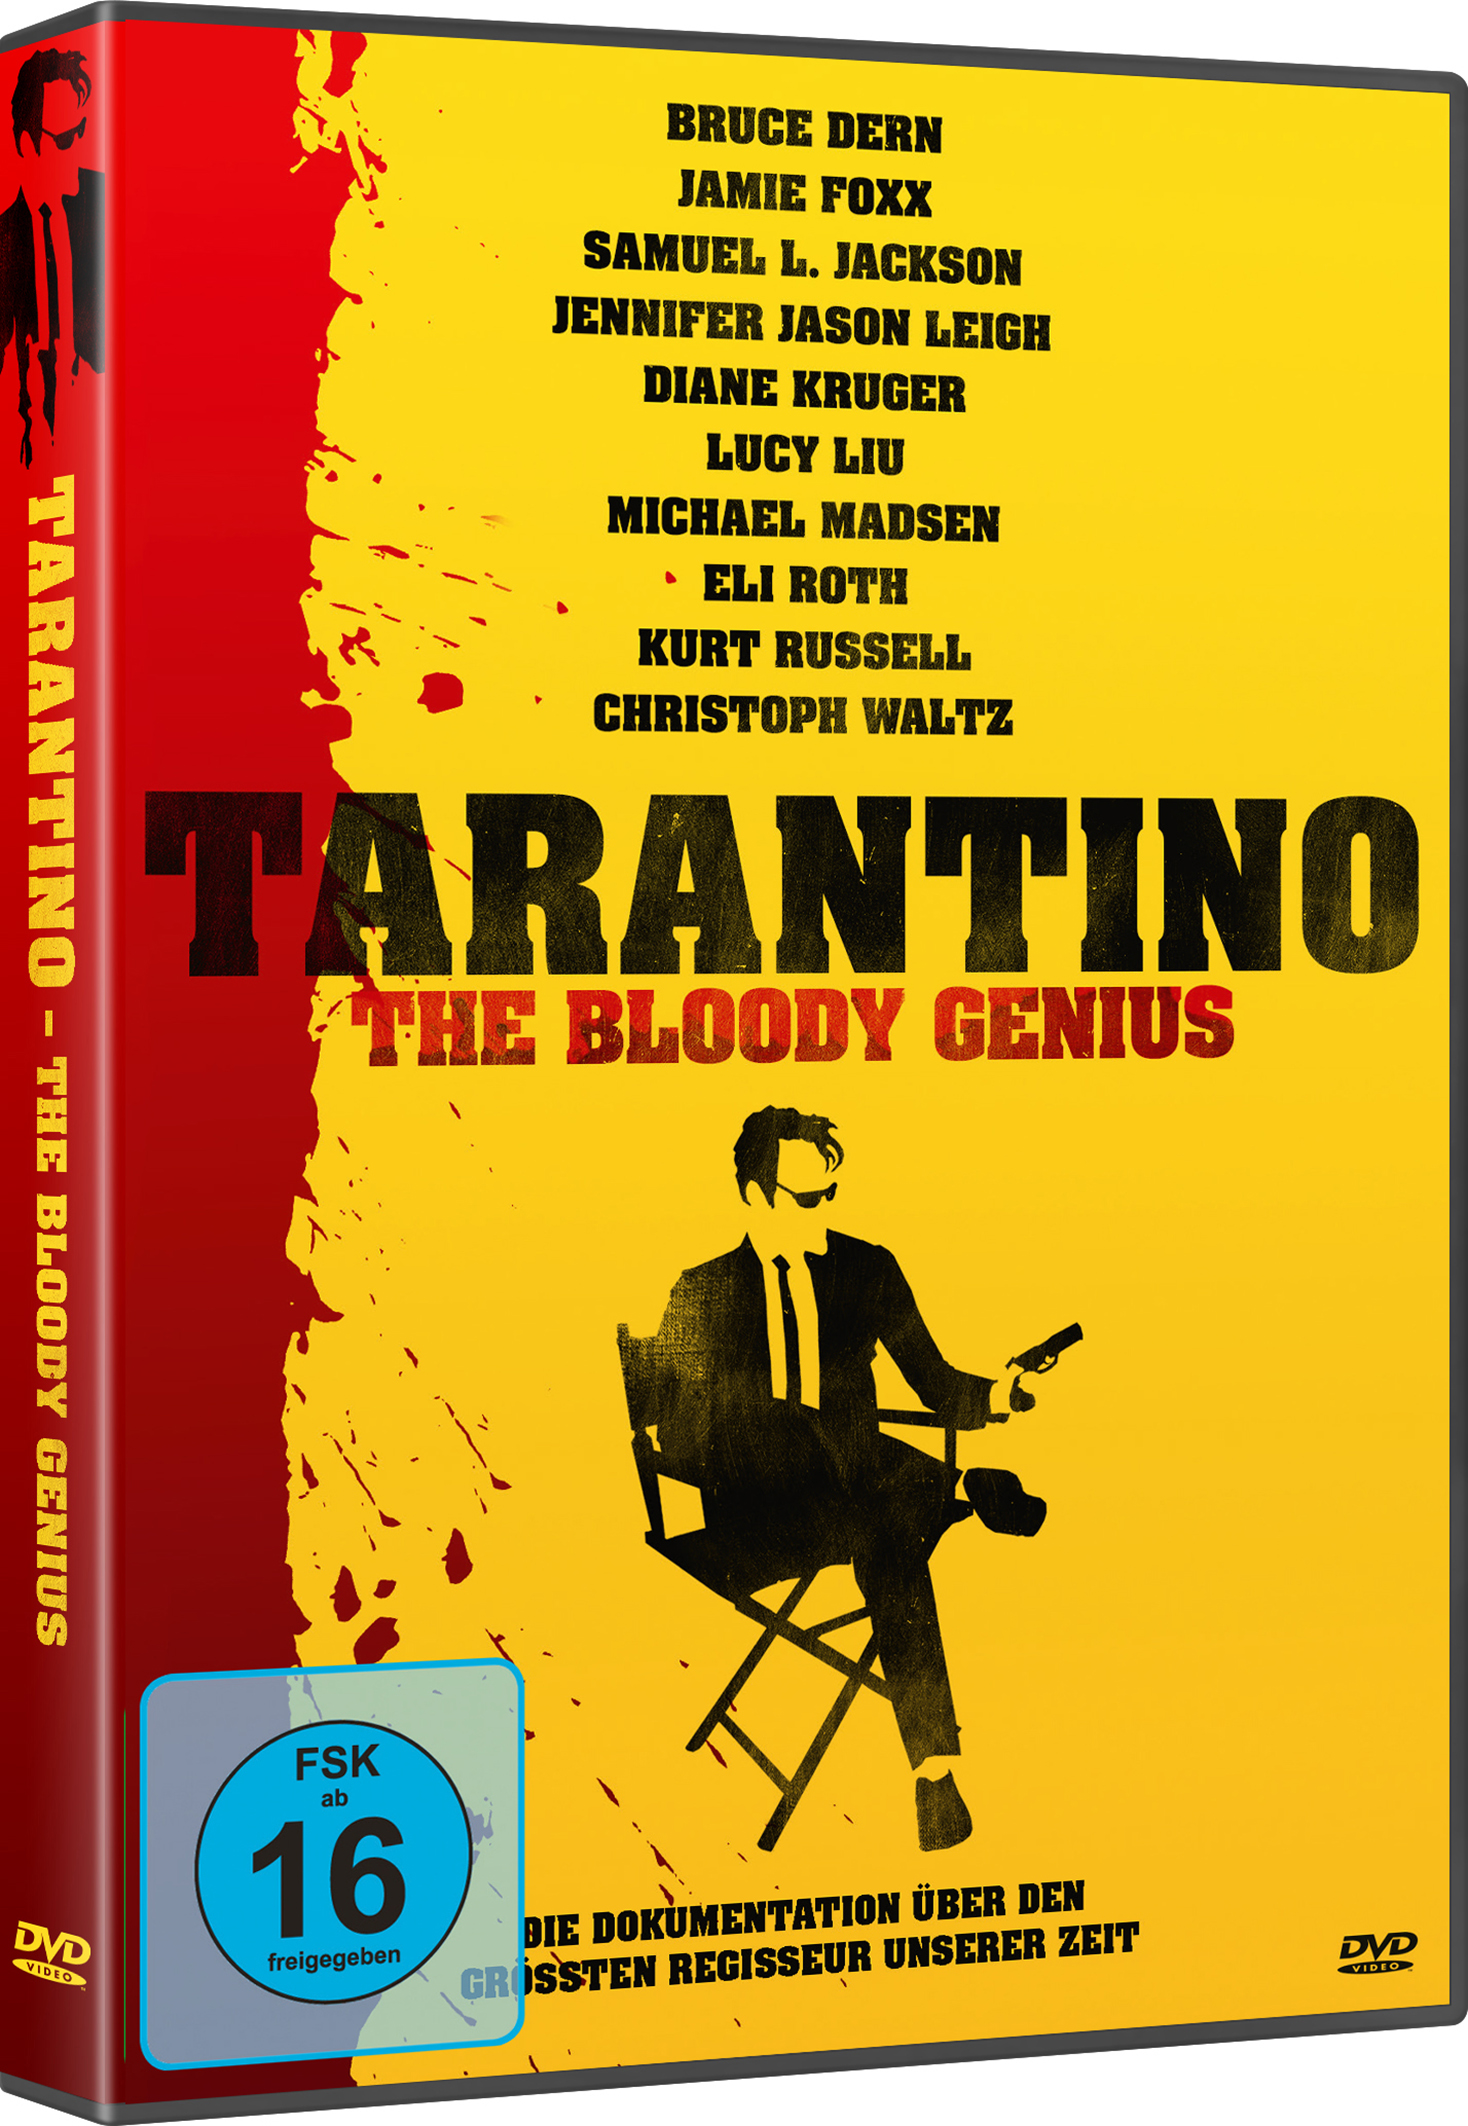 Tarantino (DVD) Image 2